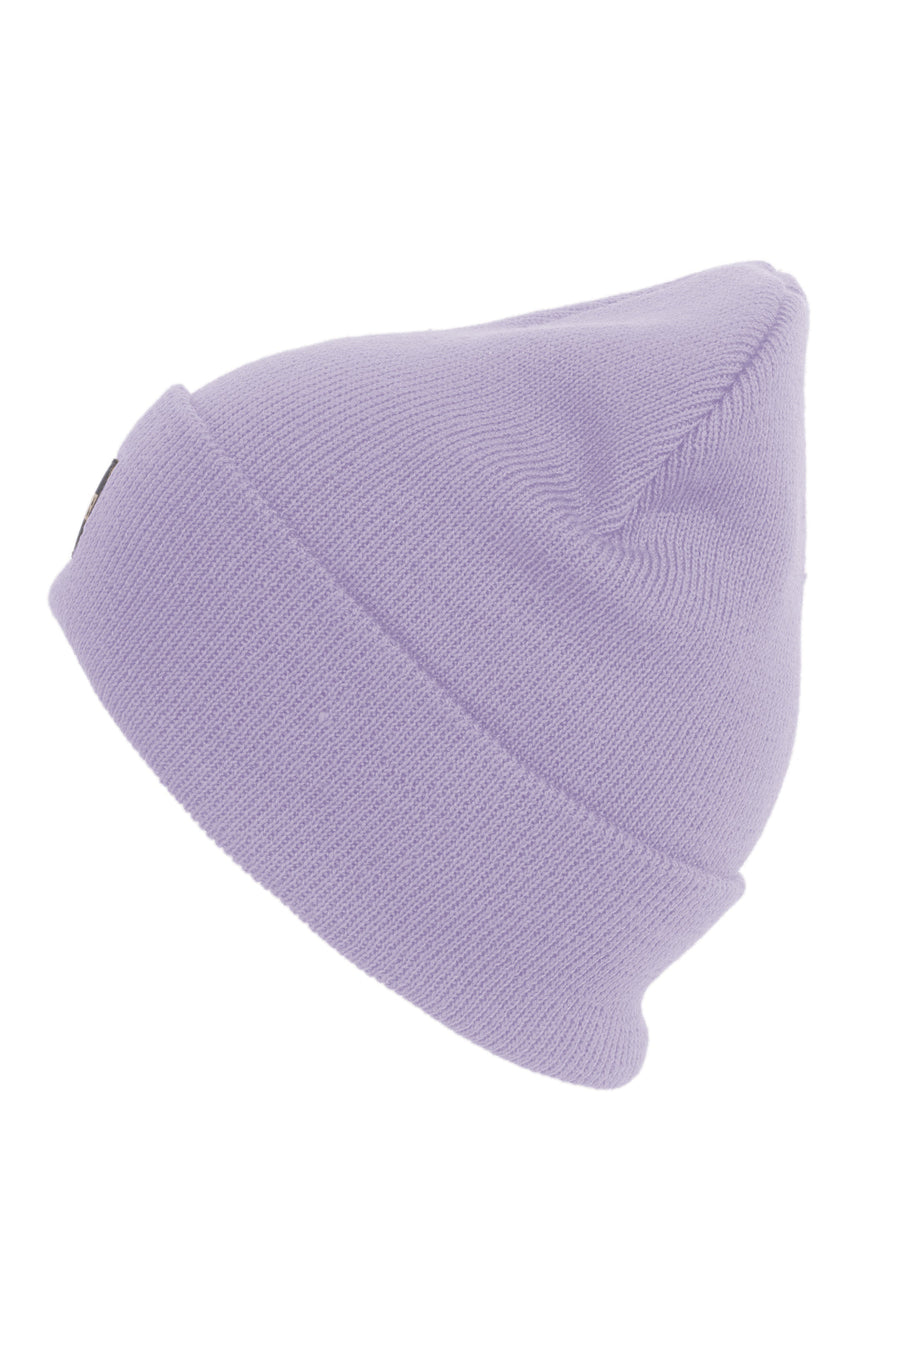 Ultra Soft Tight Knit Toque [Newport series]